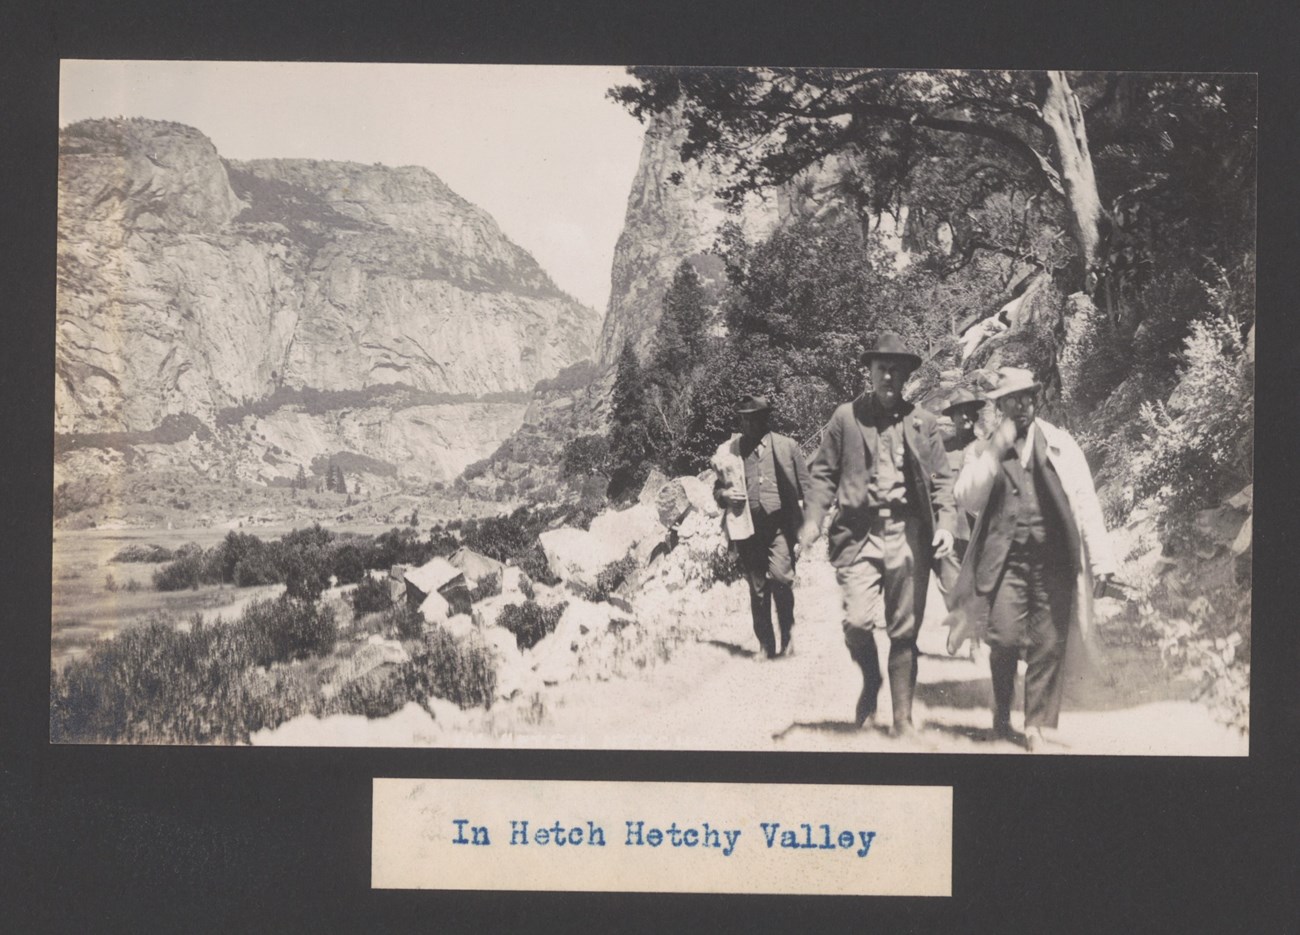 Men walking on a dirt road in the Hetch Hetchy Valley